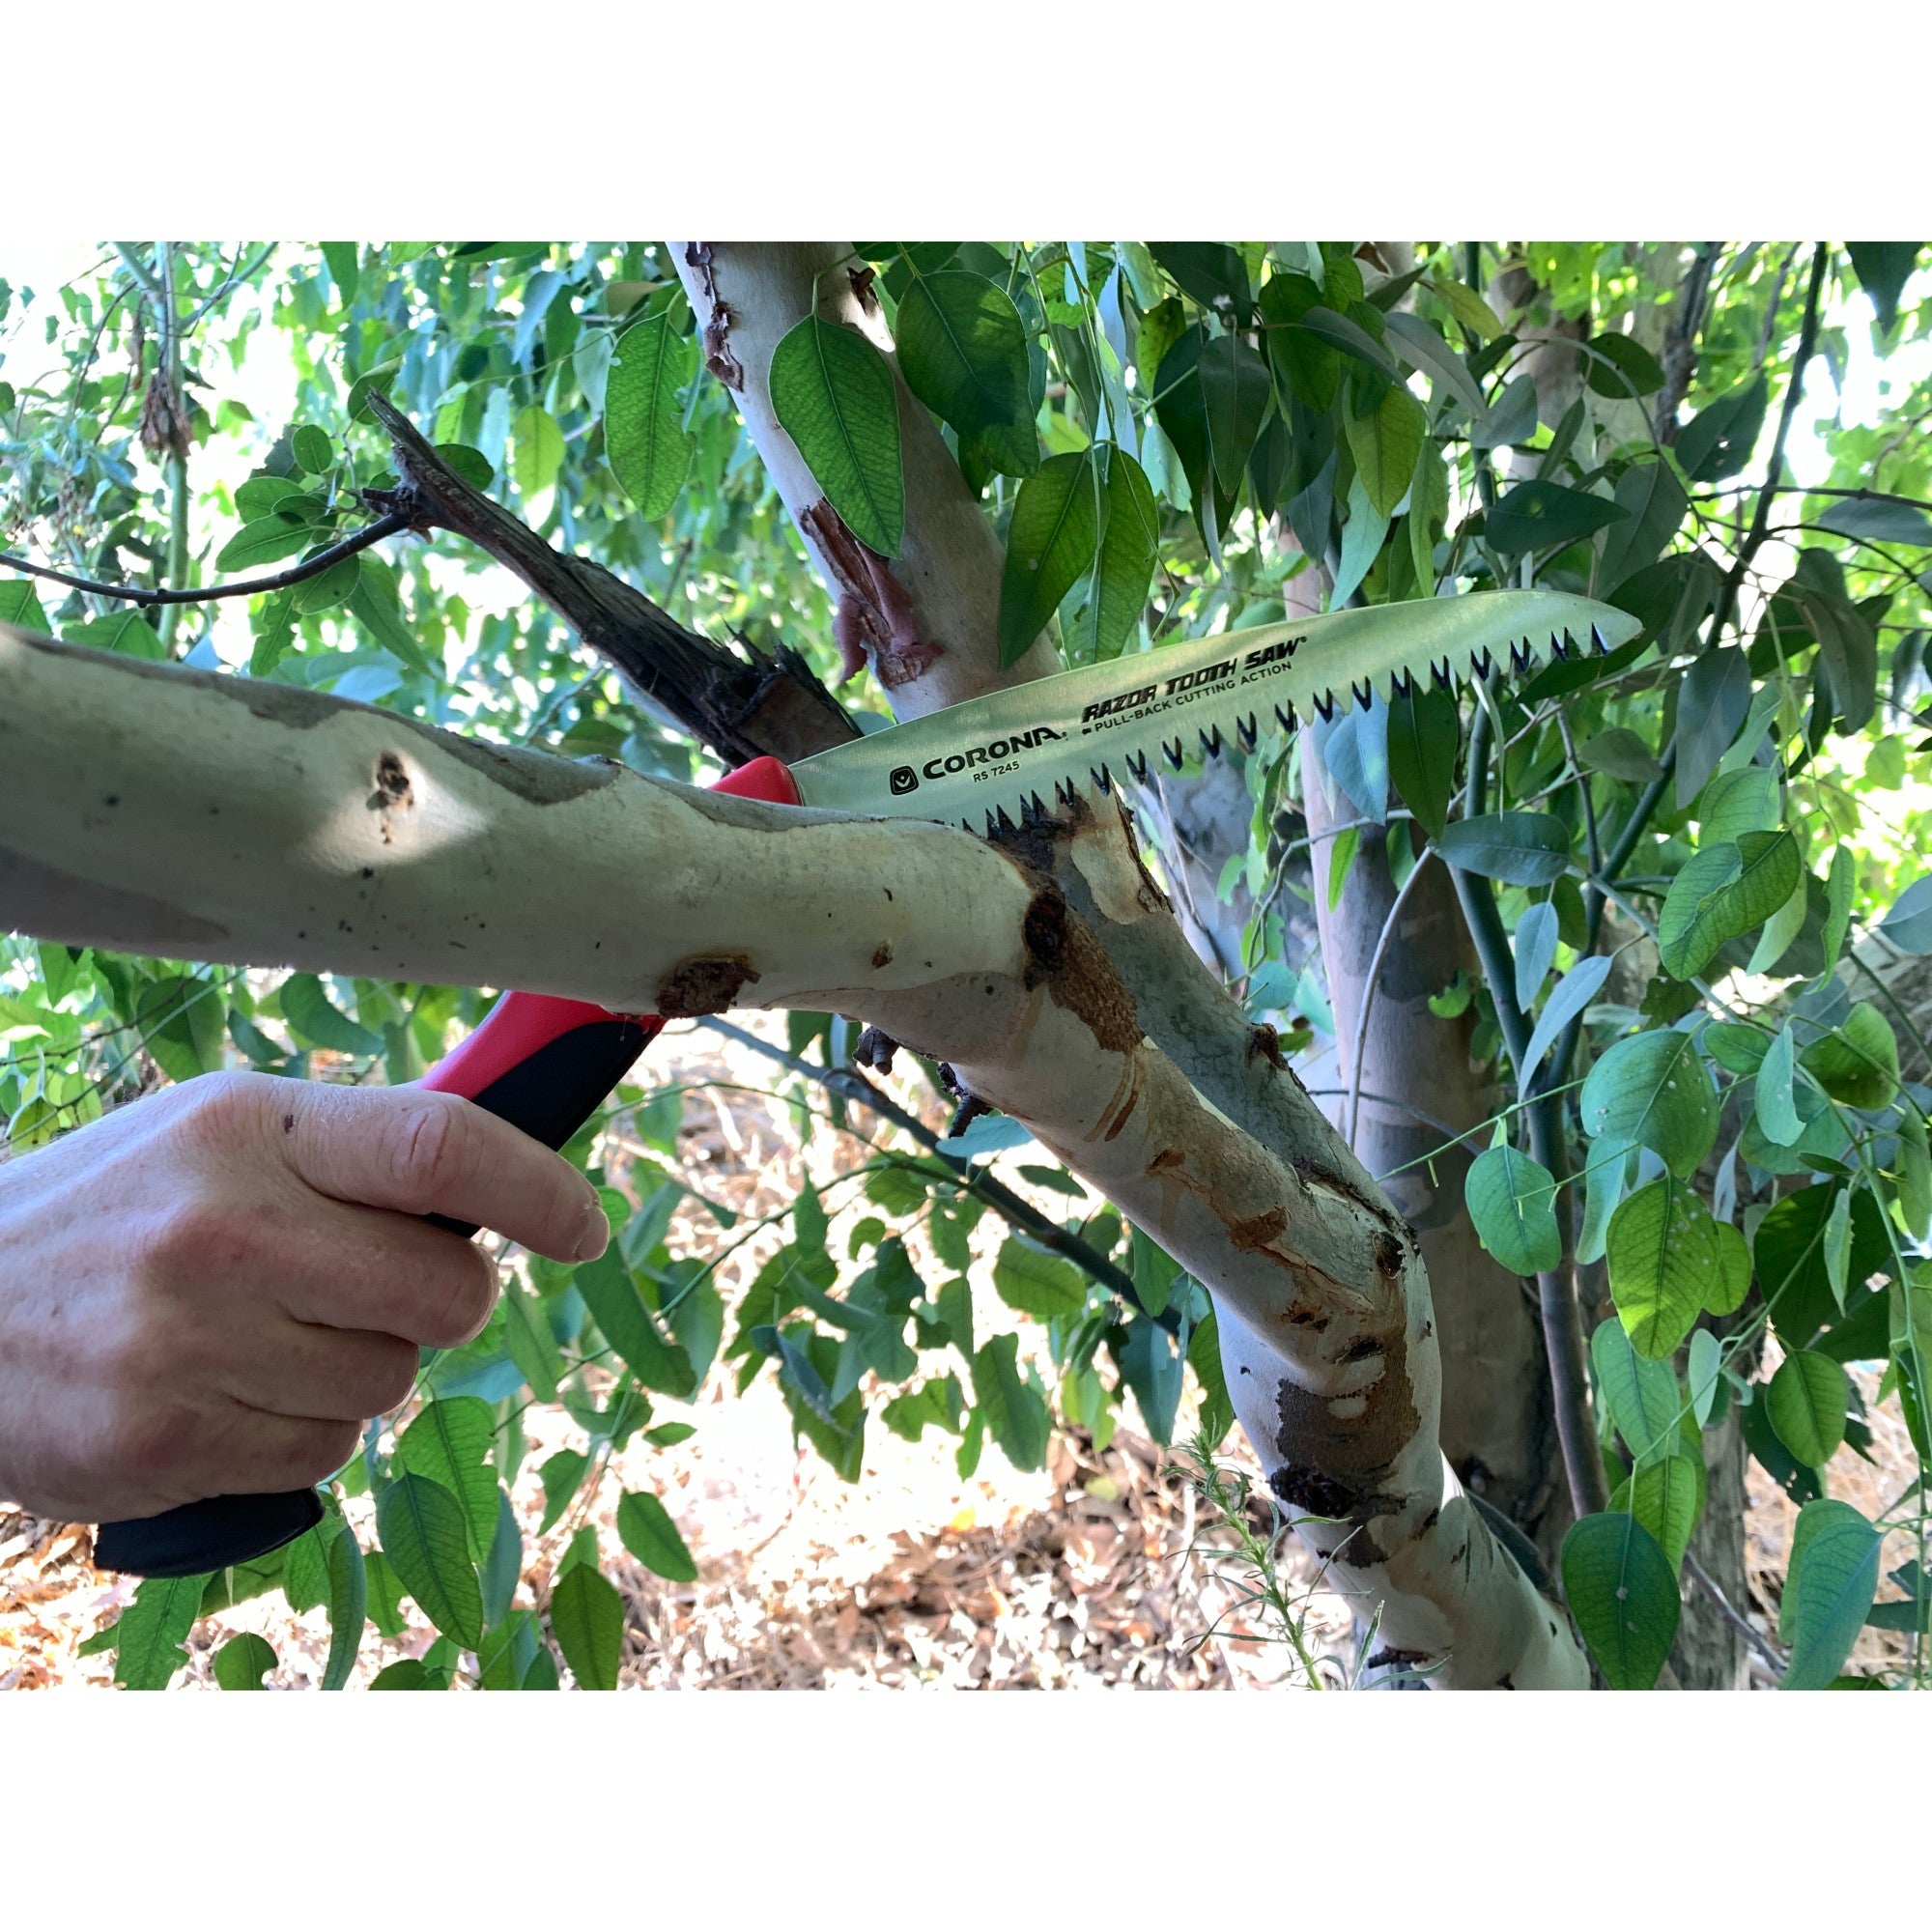 RazorTOOTH Saw® Folding Pruning Saw, 7 in. Blade